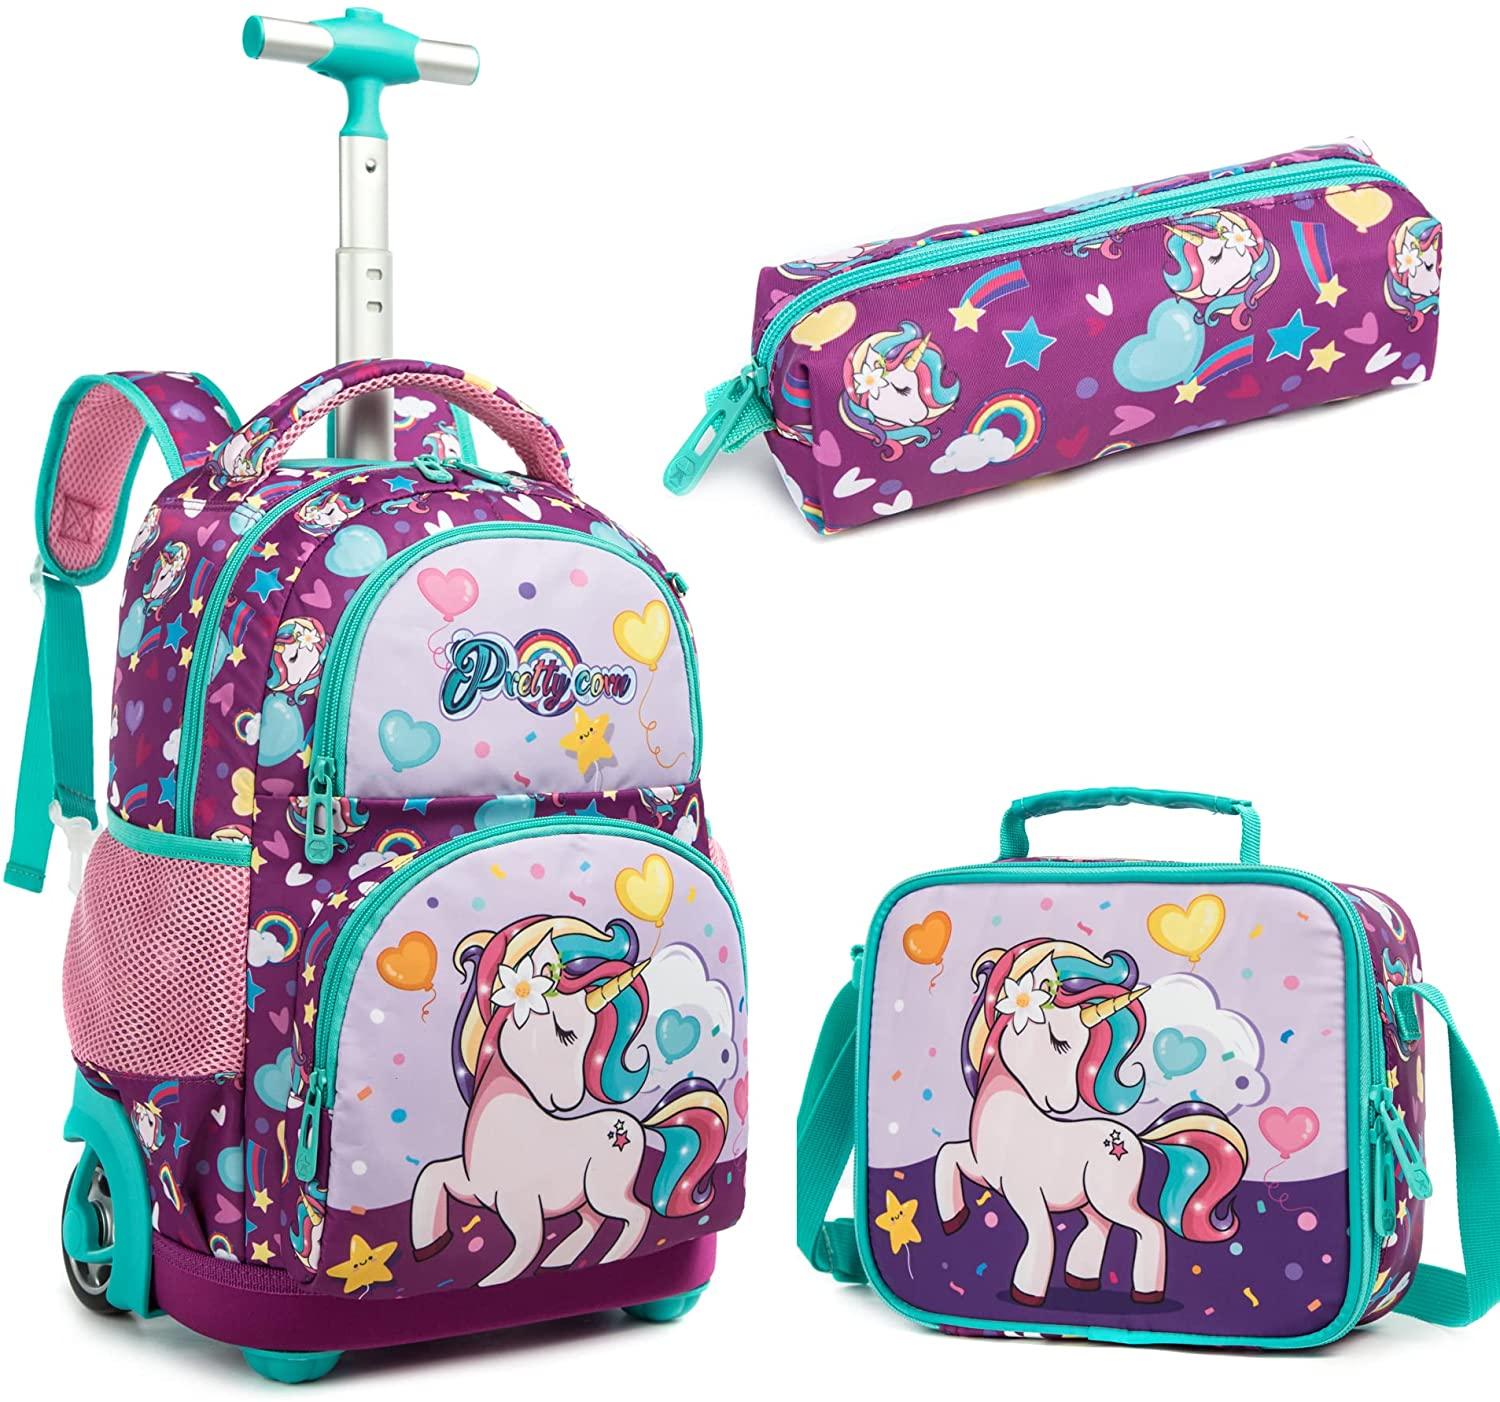 3-piece unicorn school bag with zipper and wheels - Unicorn